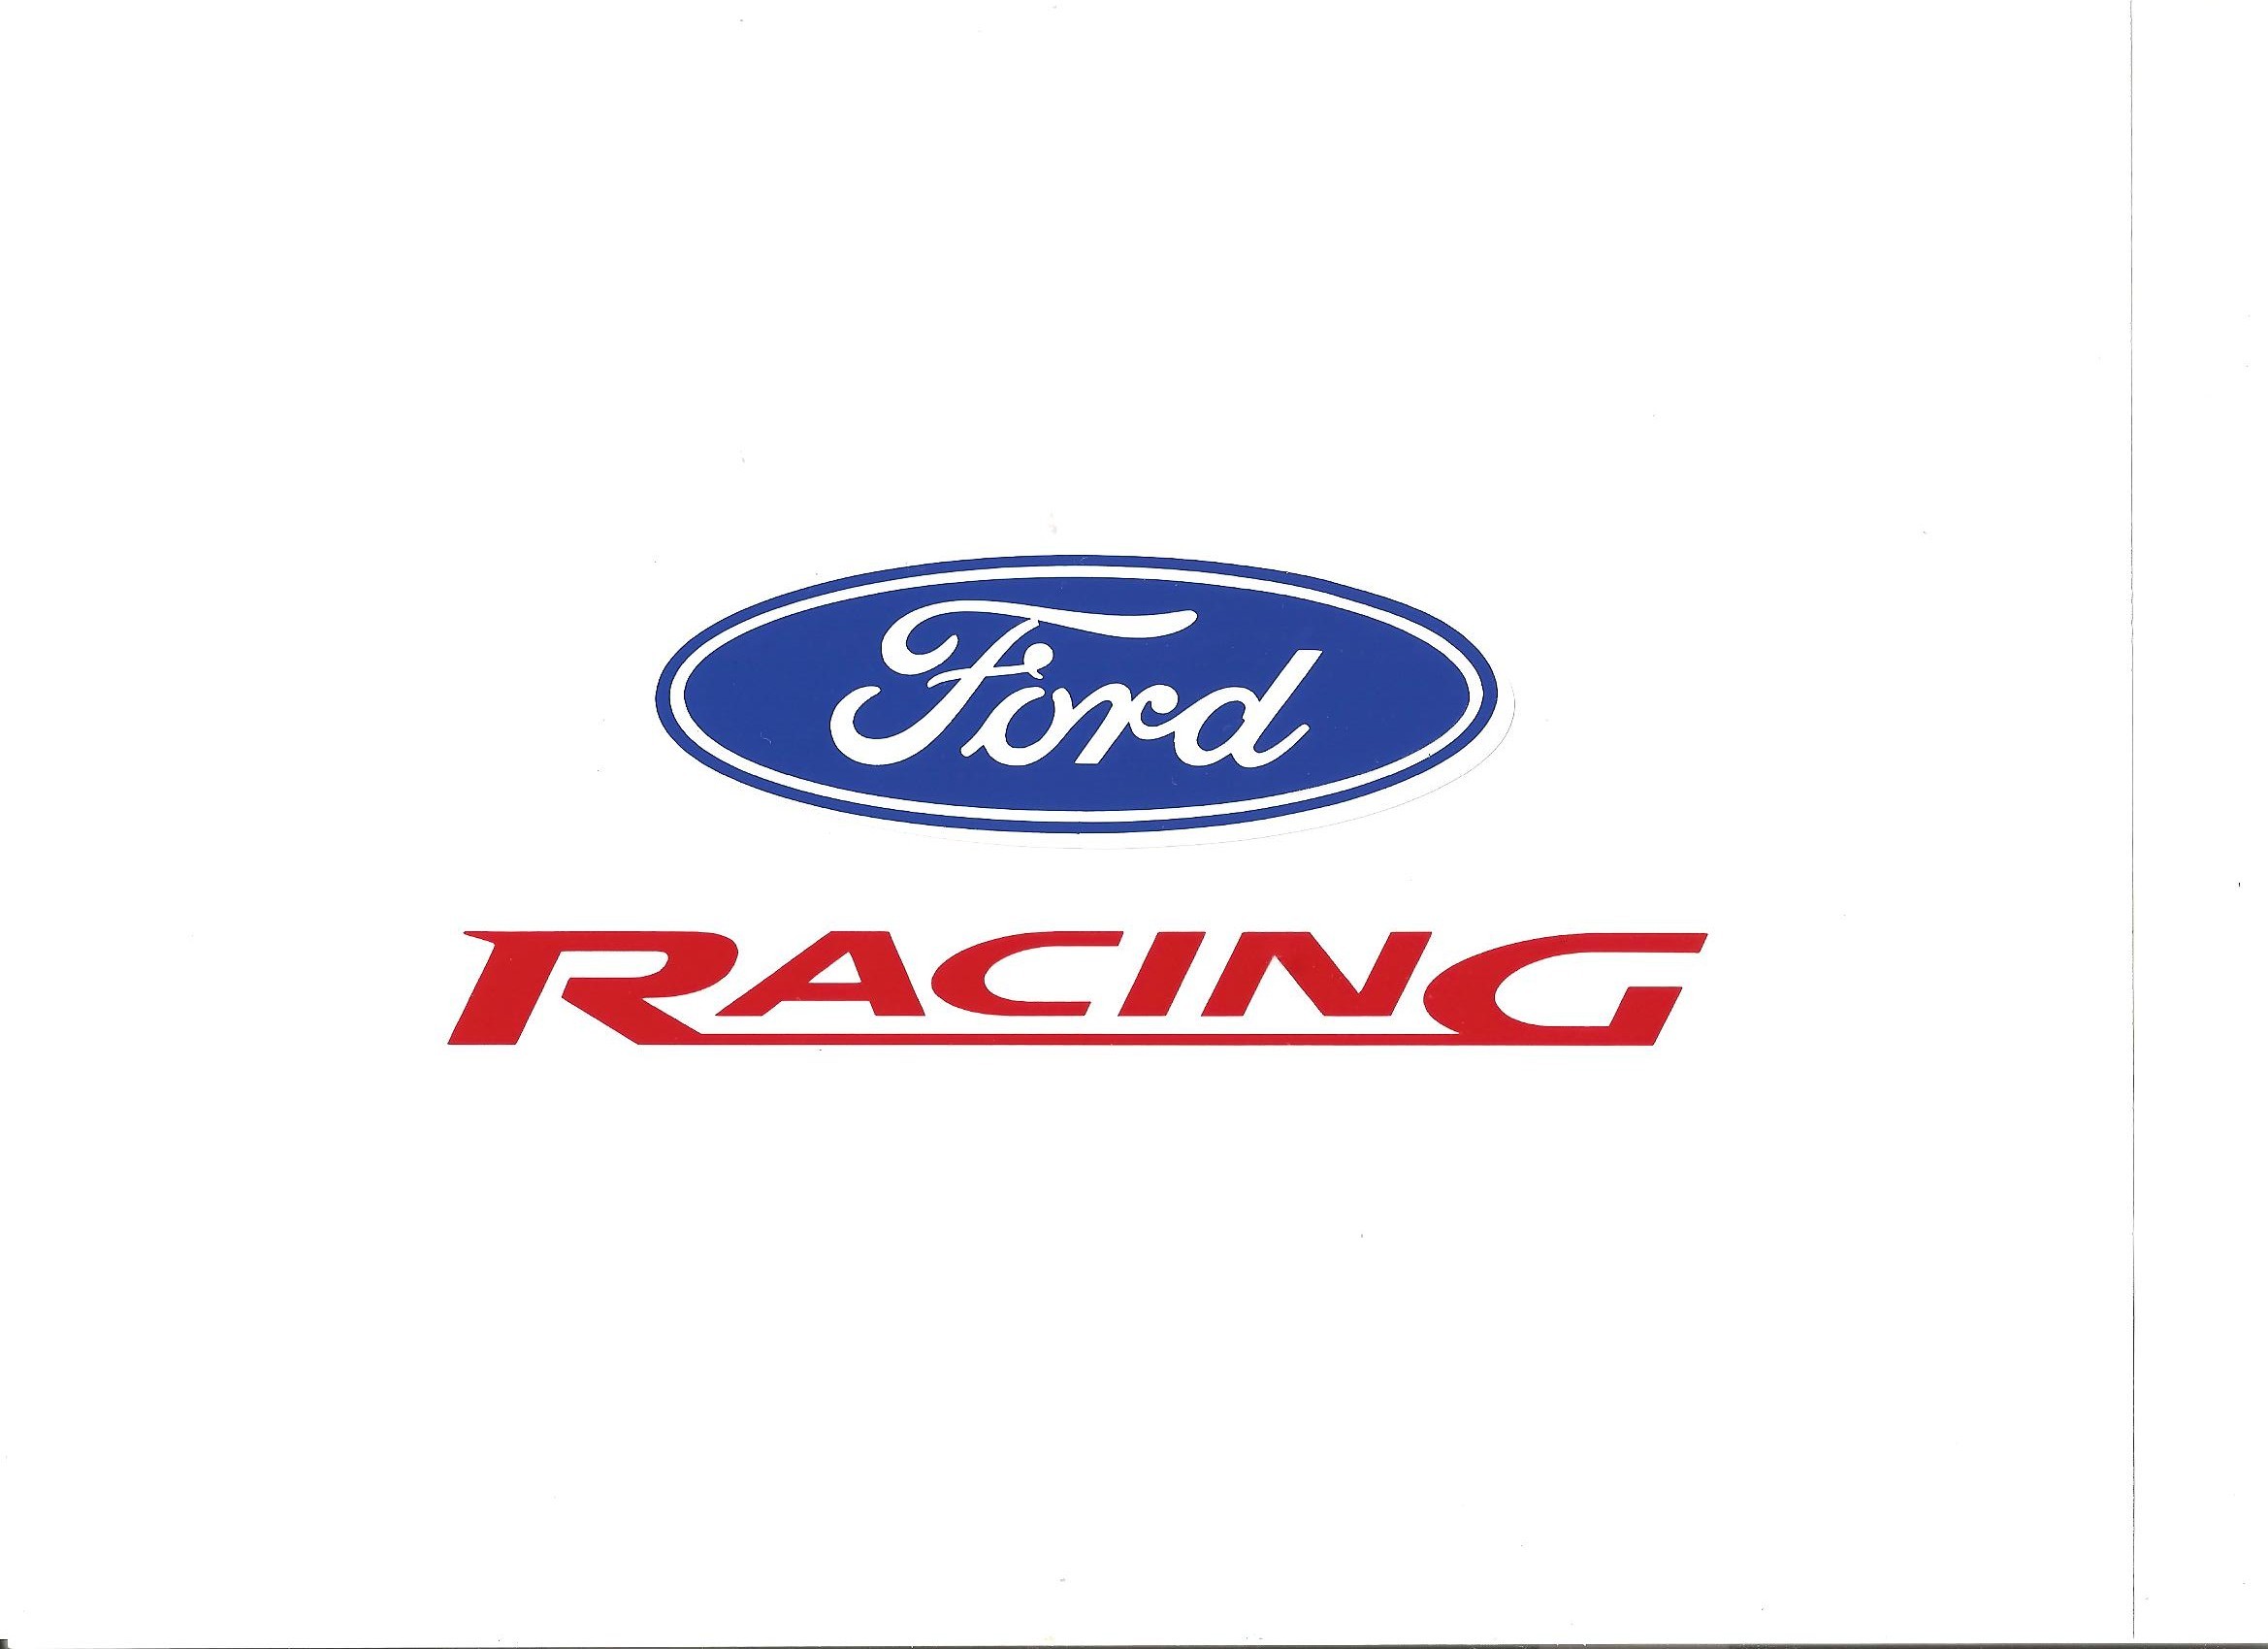 2338x1700 ford-racing image - 12